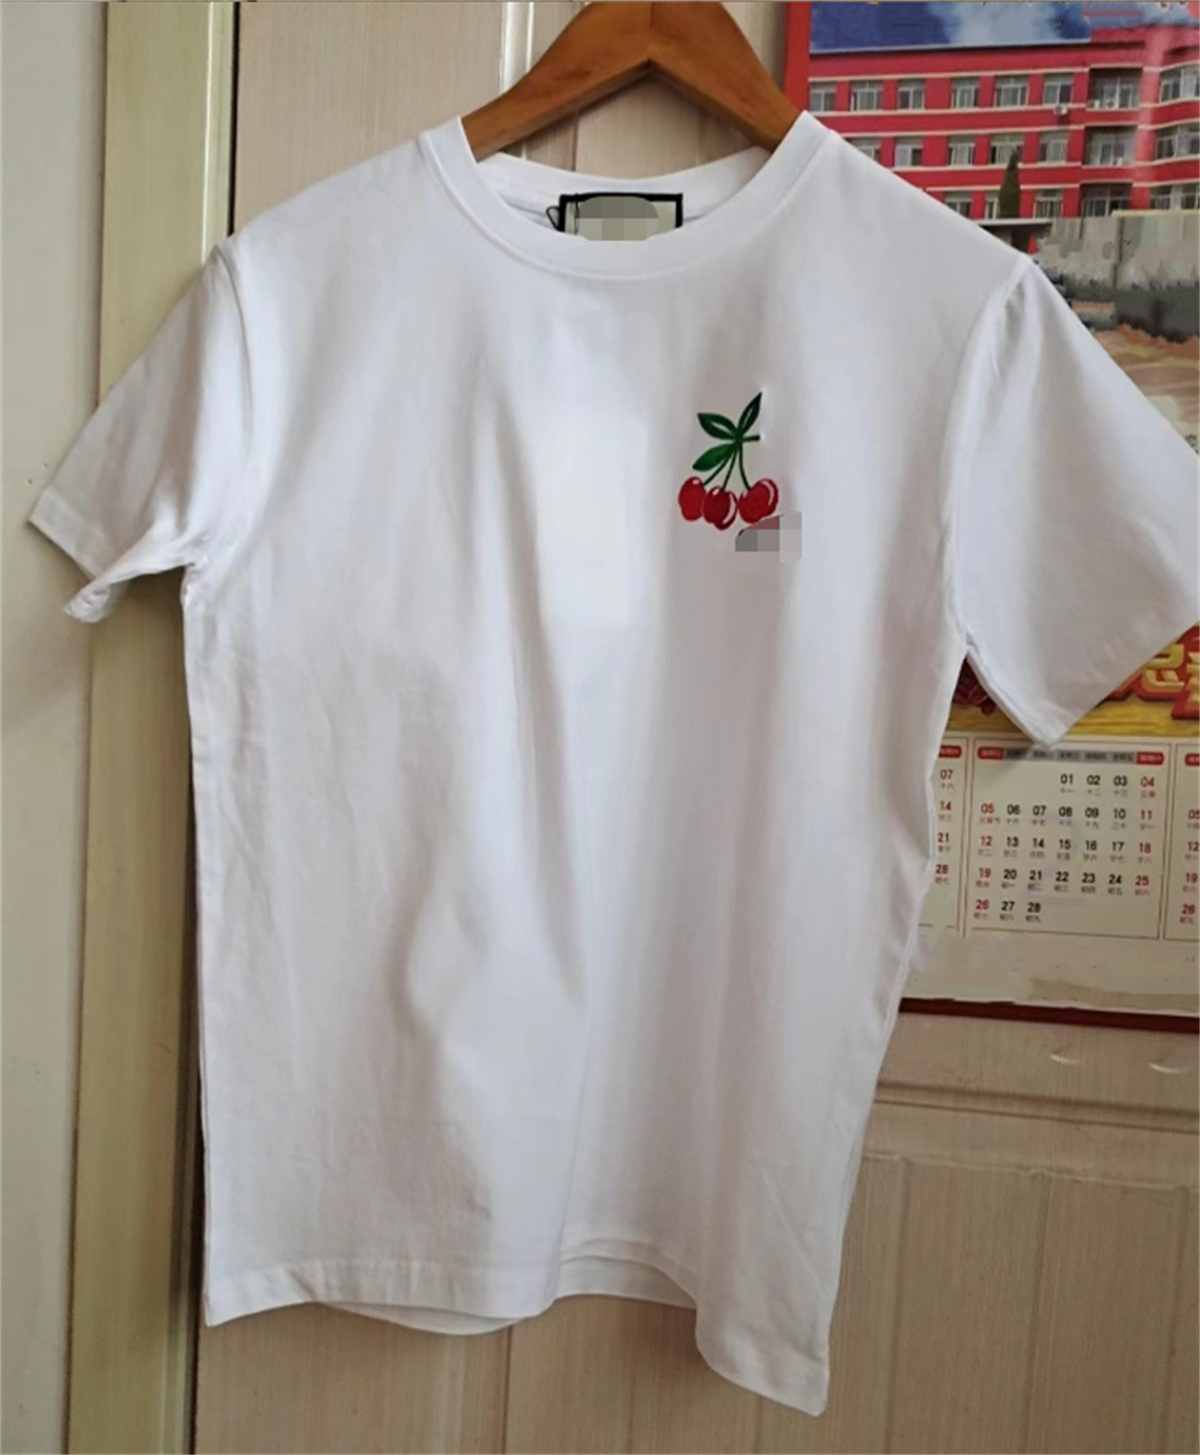 Womens Shirt Cotton Men's T-shirts Designer T shirt Summer Clothing For Young Mens T-Shirts White Black Tshirts For women Tees big Size S-4XL